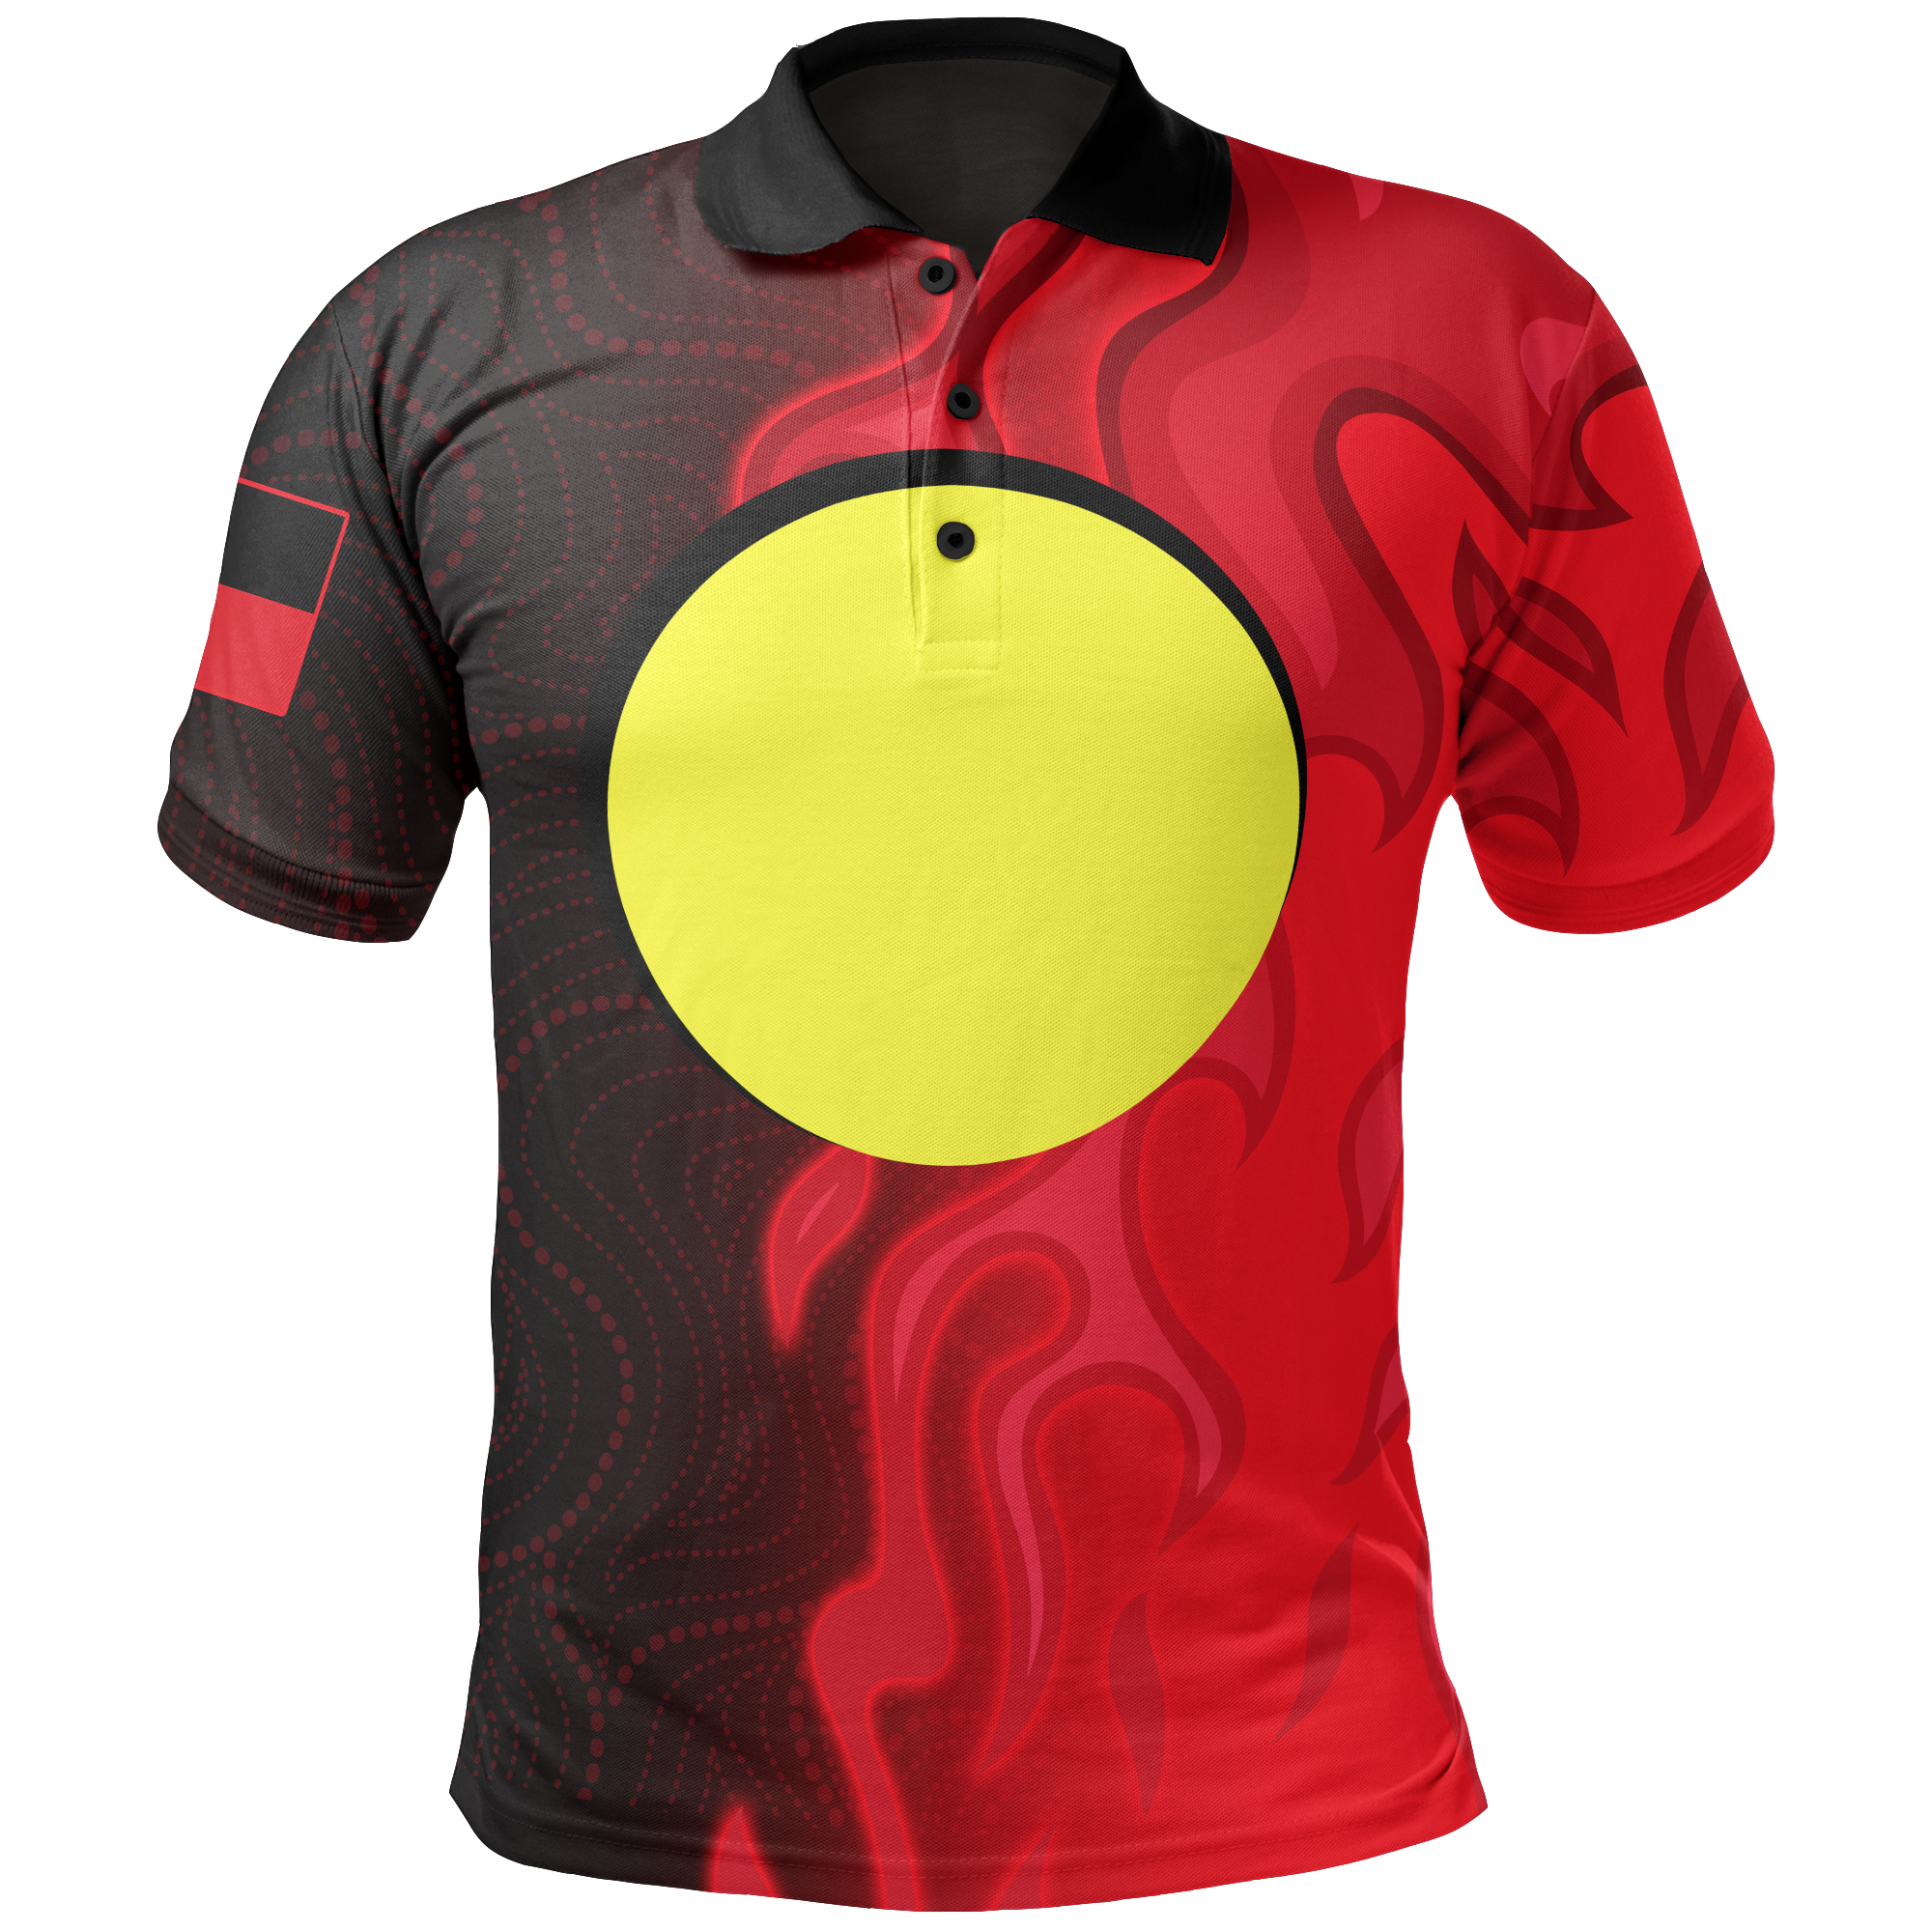 polo-shirt-aboriginal-patterns-shirt-sun-australia-flame-unisex